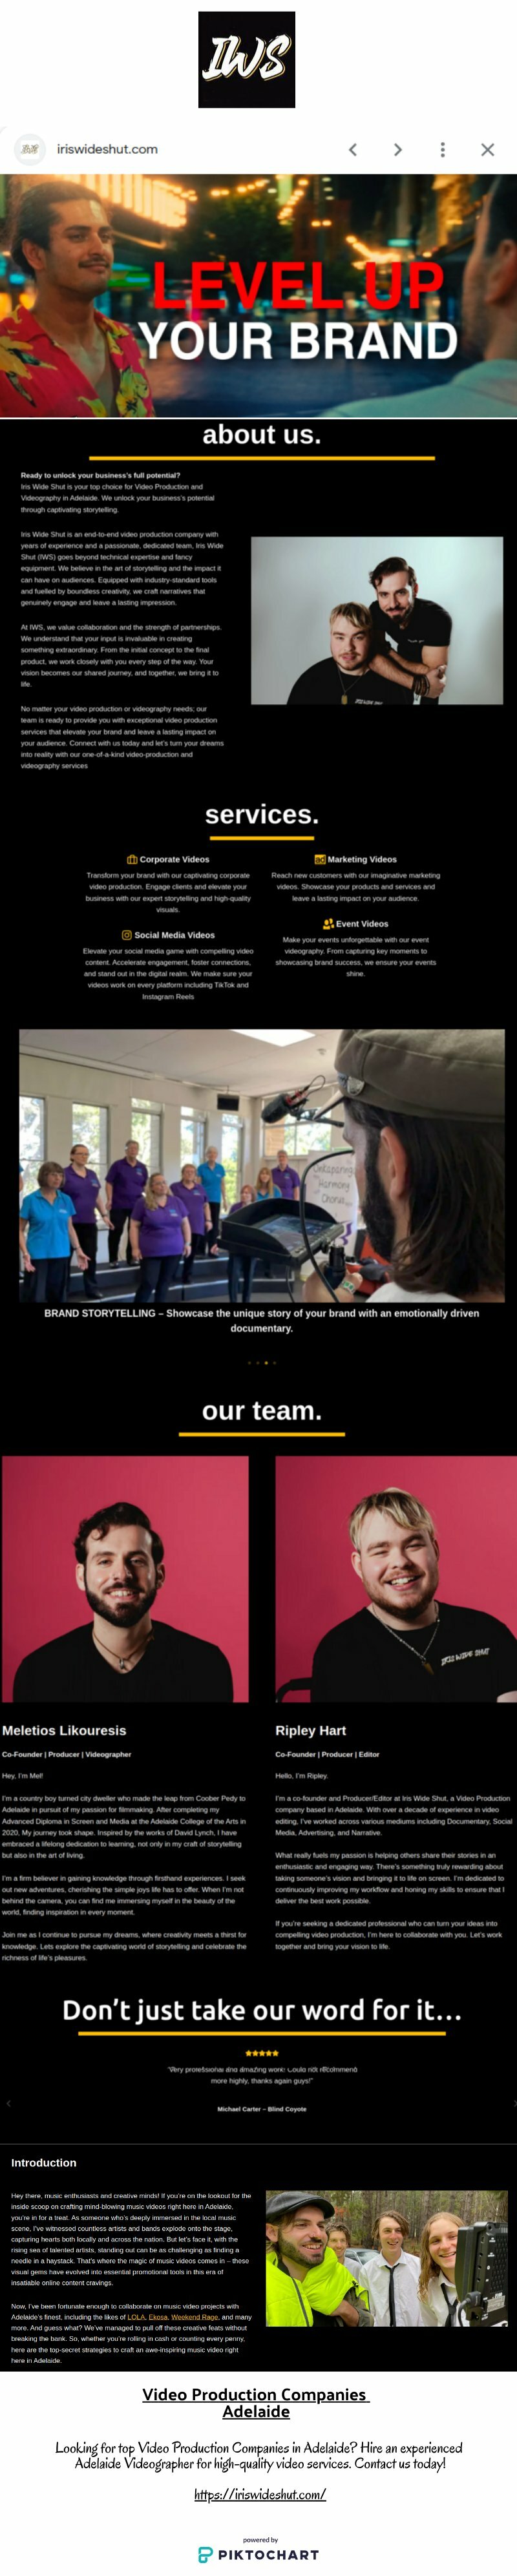 Video Production Companies Adelaide | Piktochart Visual Editor